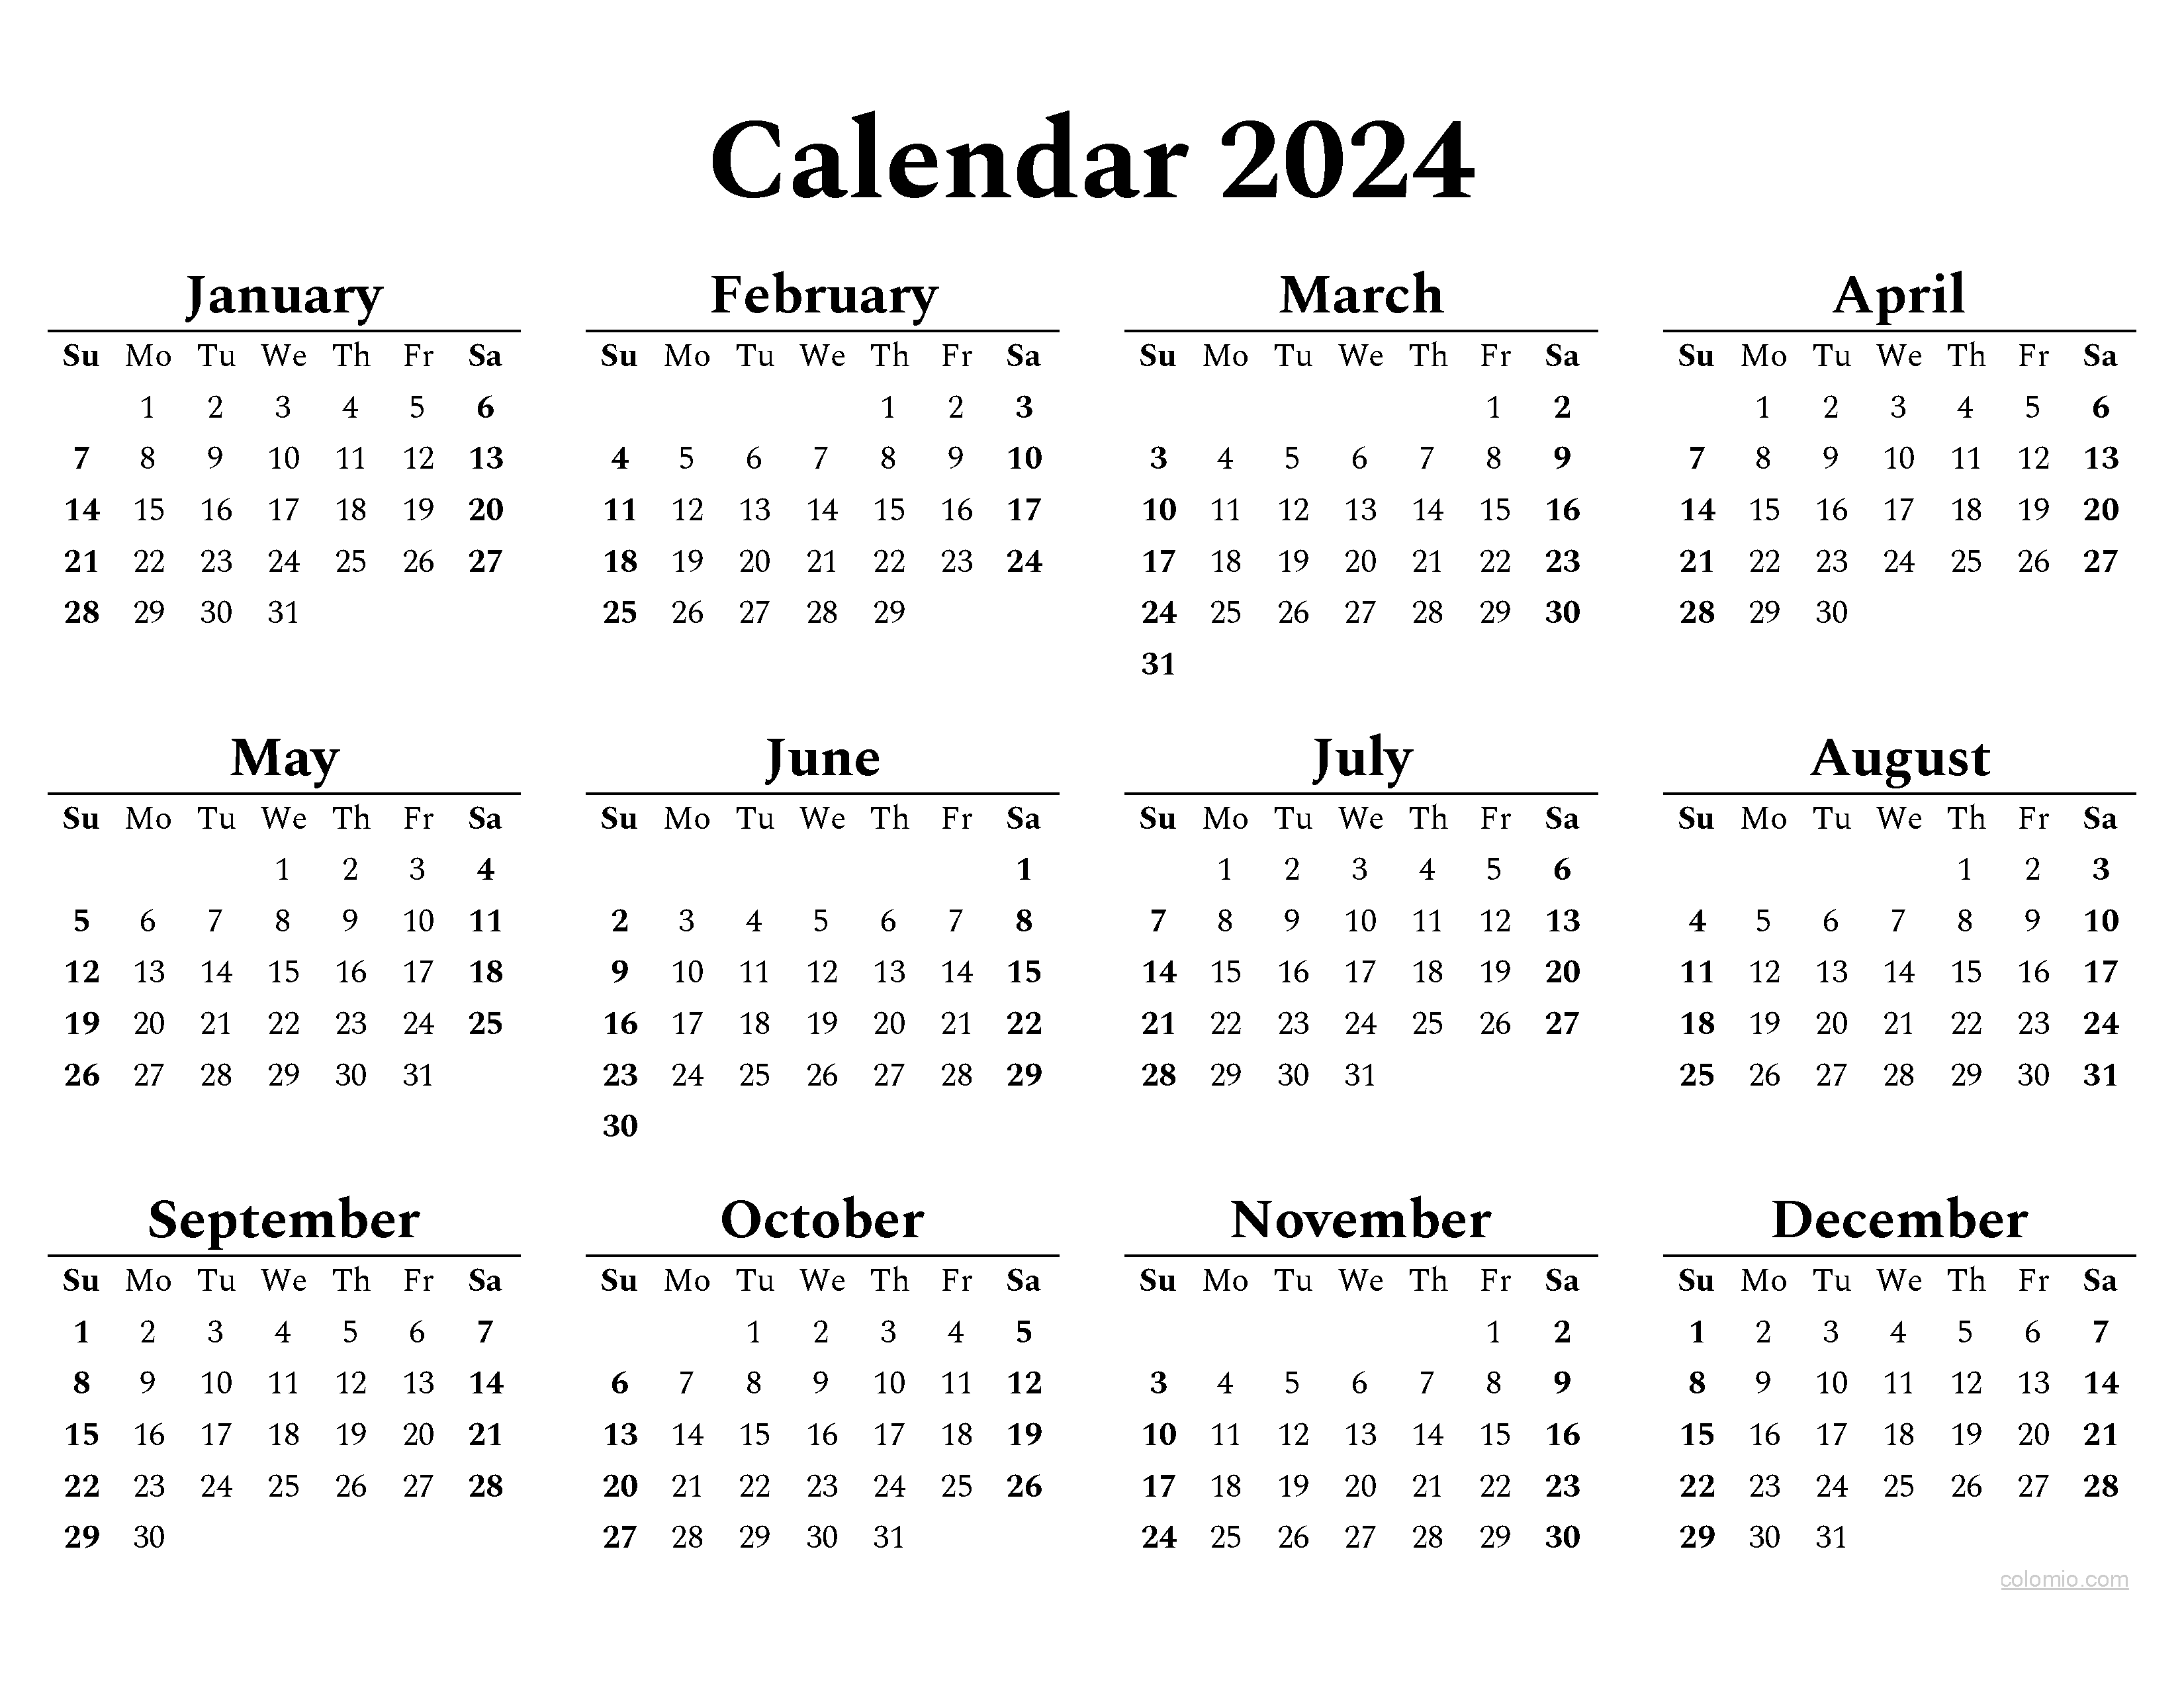 Calendar 2024 Template Pdf Fina Orelle - Free Printable 2024 Calendar By Month August